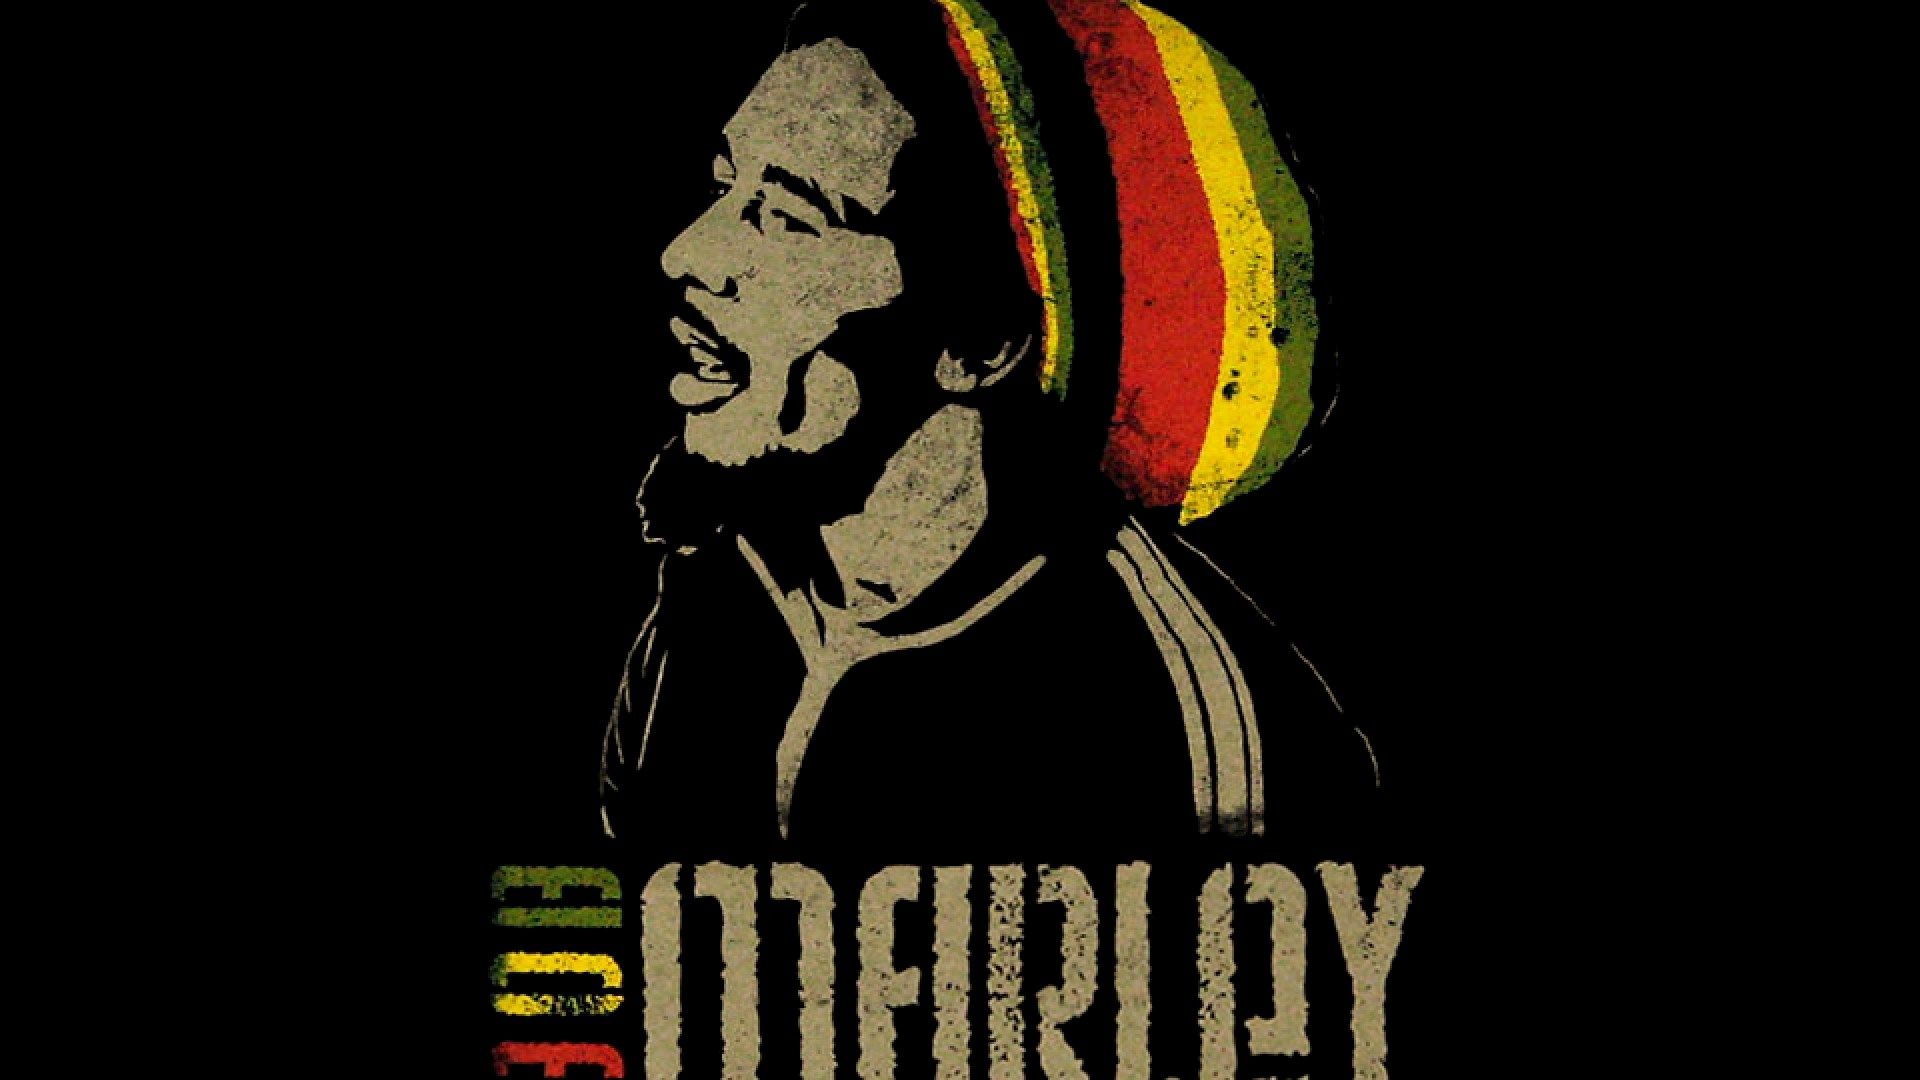 Bob Marley: Awarded the Jamaican Order of Merit, February 1981. 1920x1080 Full HD Wallpaper.